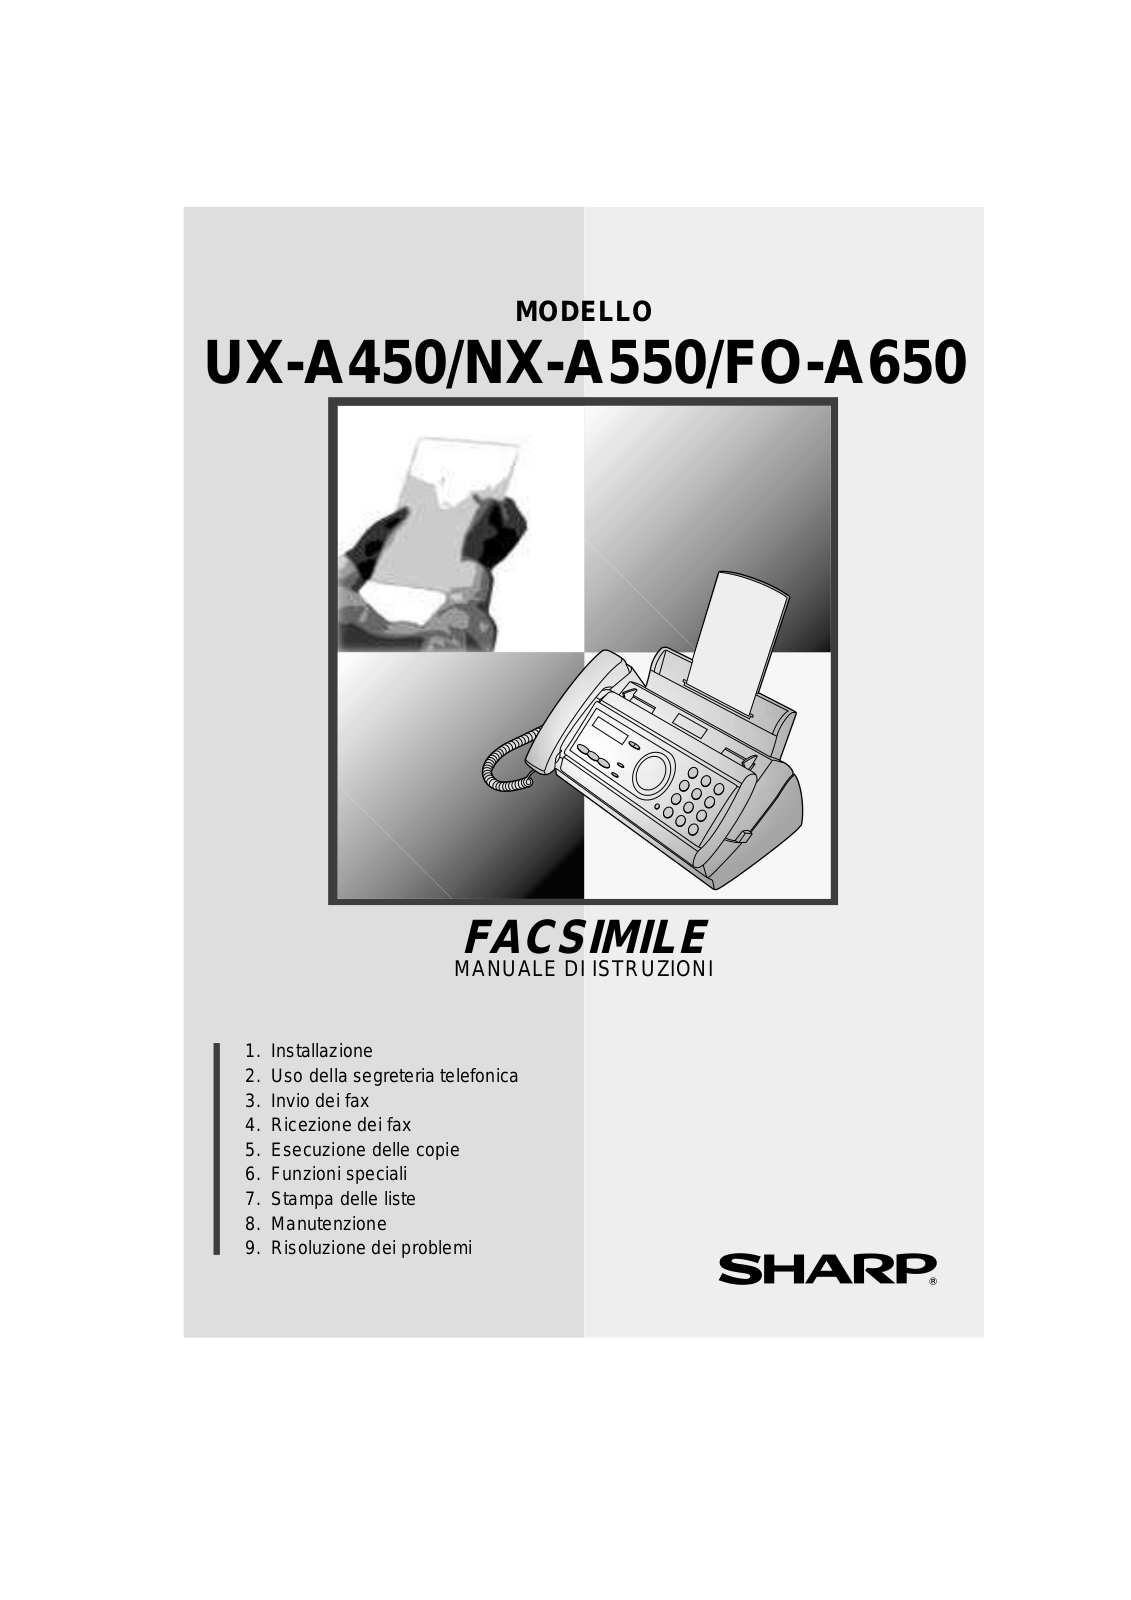 SHARP UX-A450IT User Manual